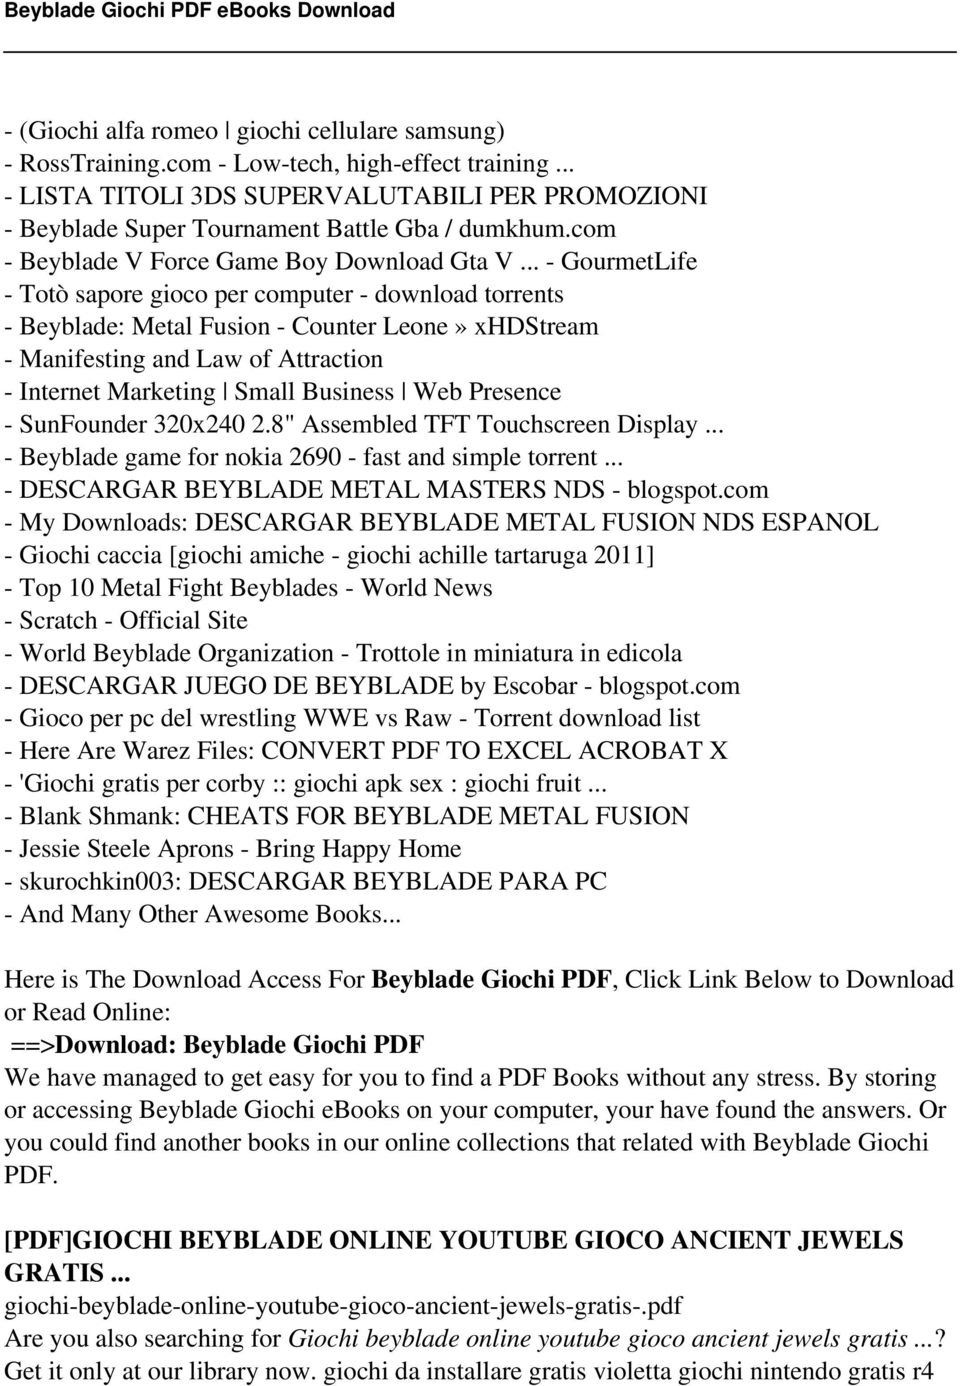 Beyblade All Seasons Free Download Torrent